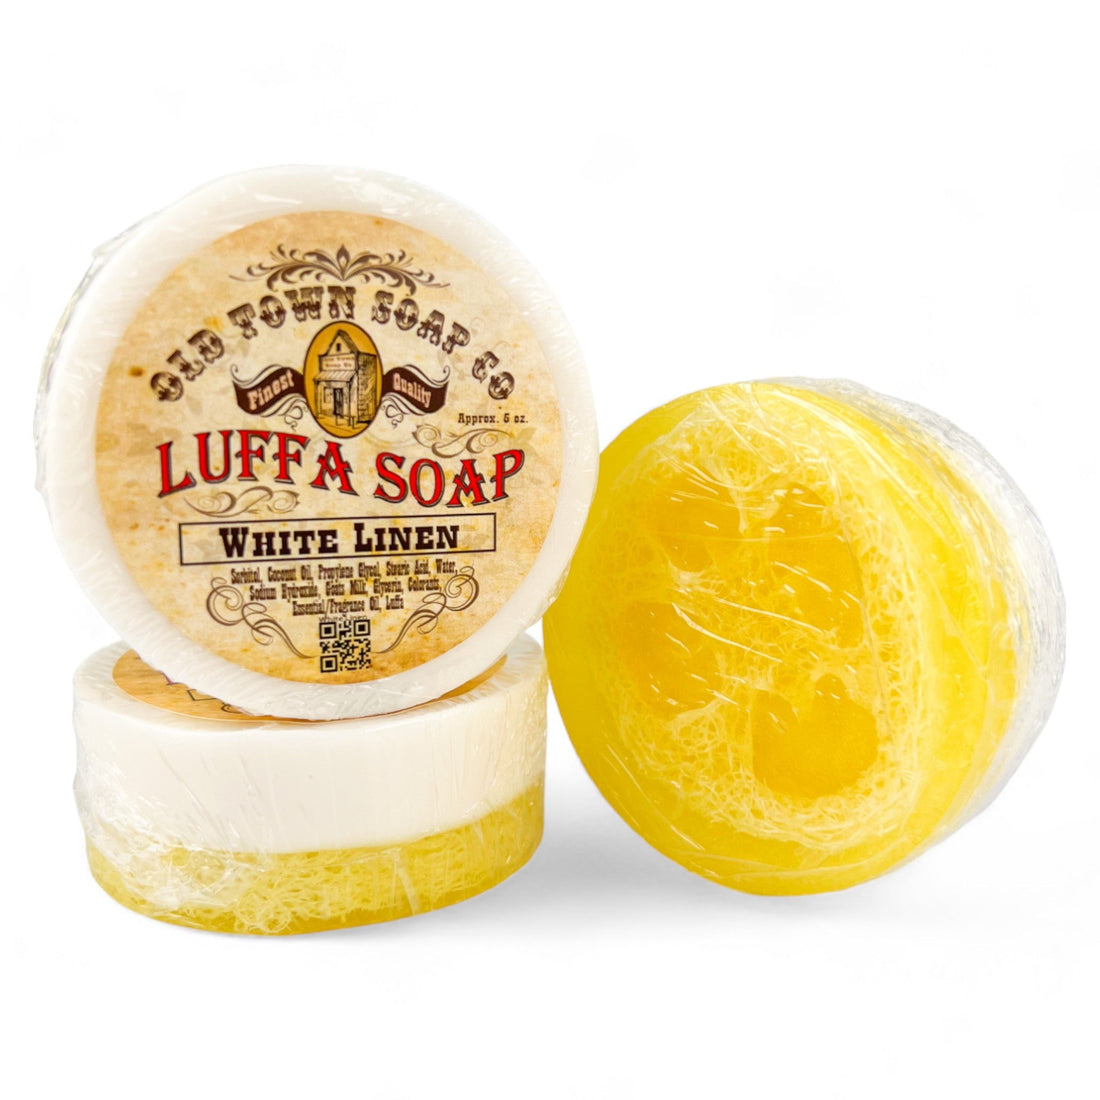 White Linen -Luffa Soap - Old Town Soap Co.